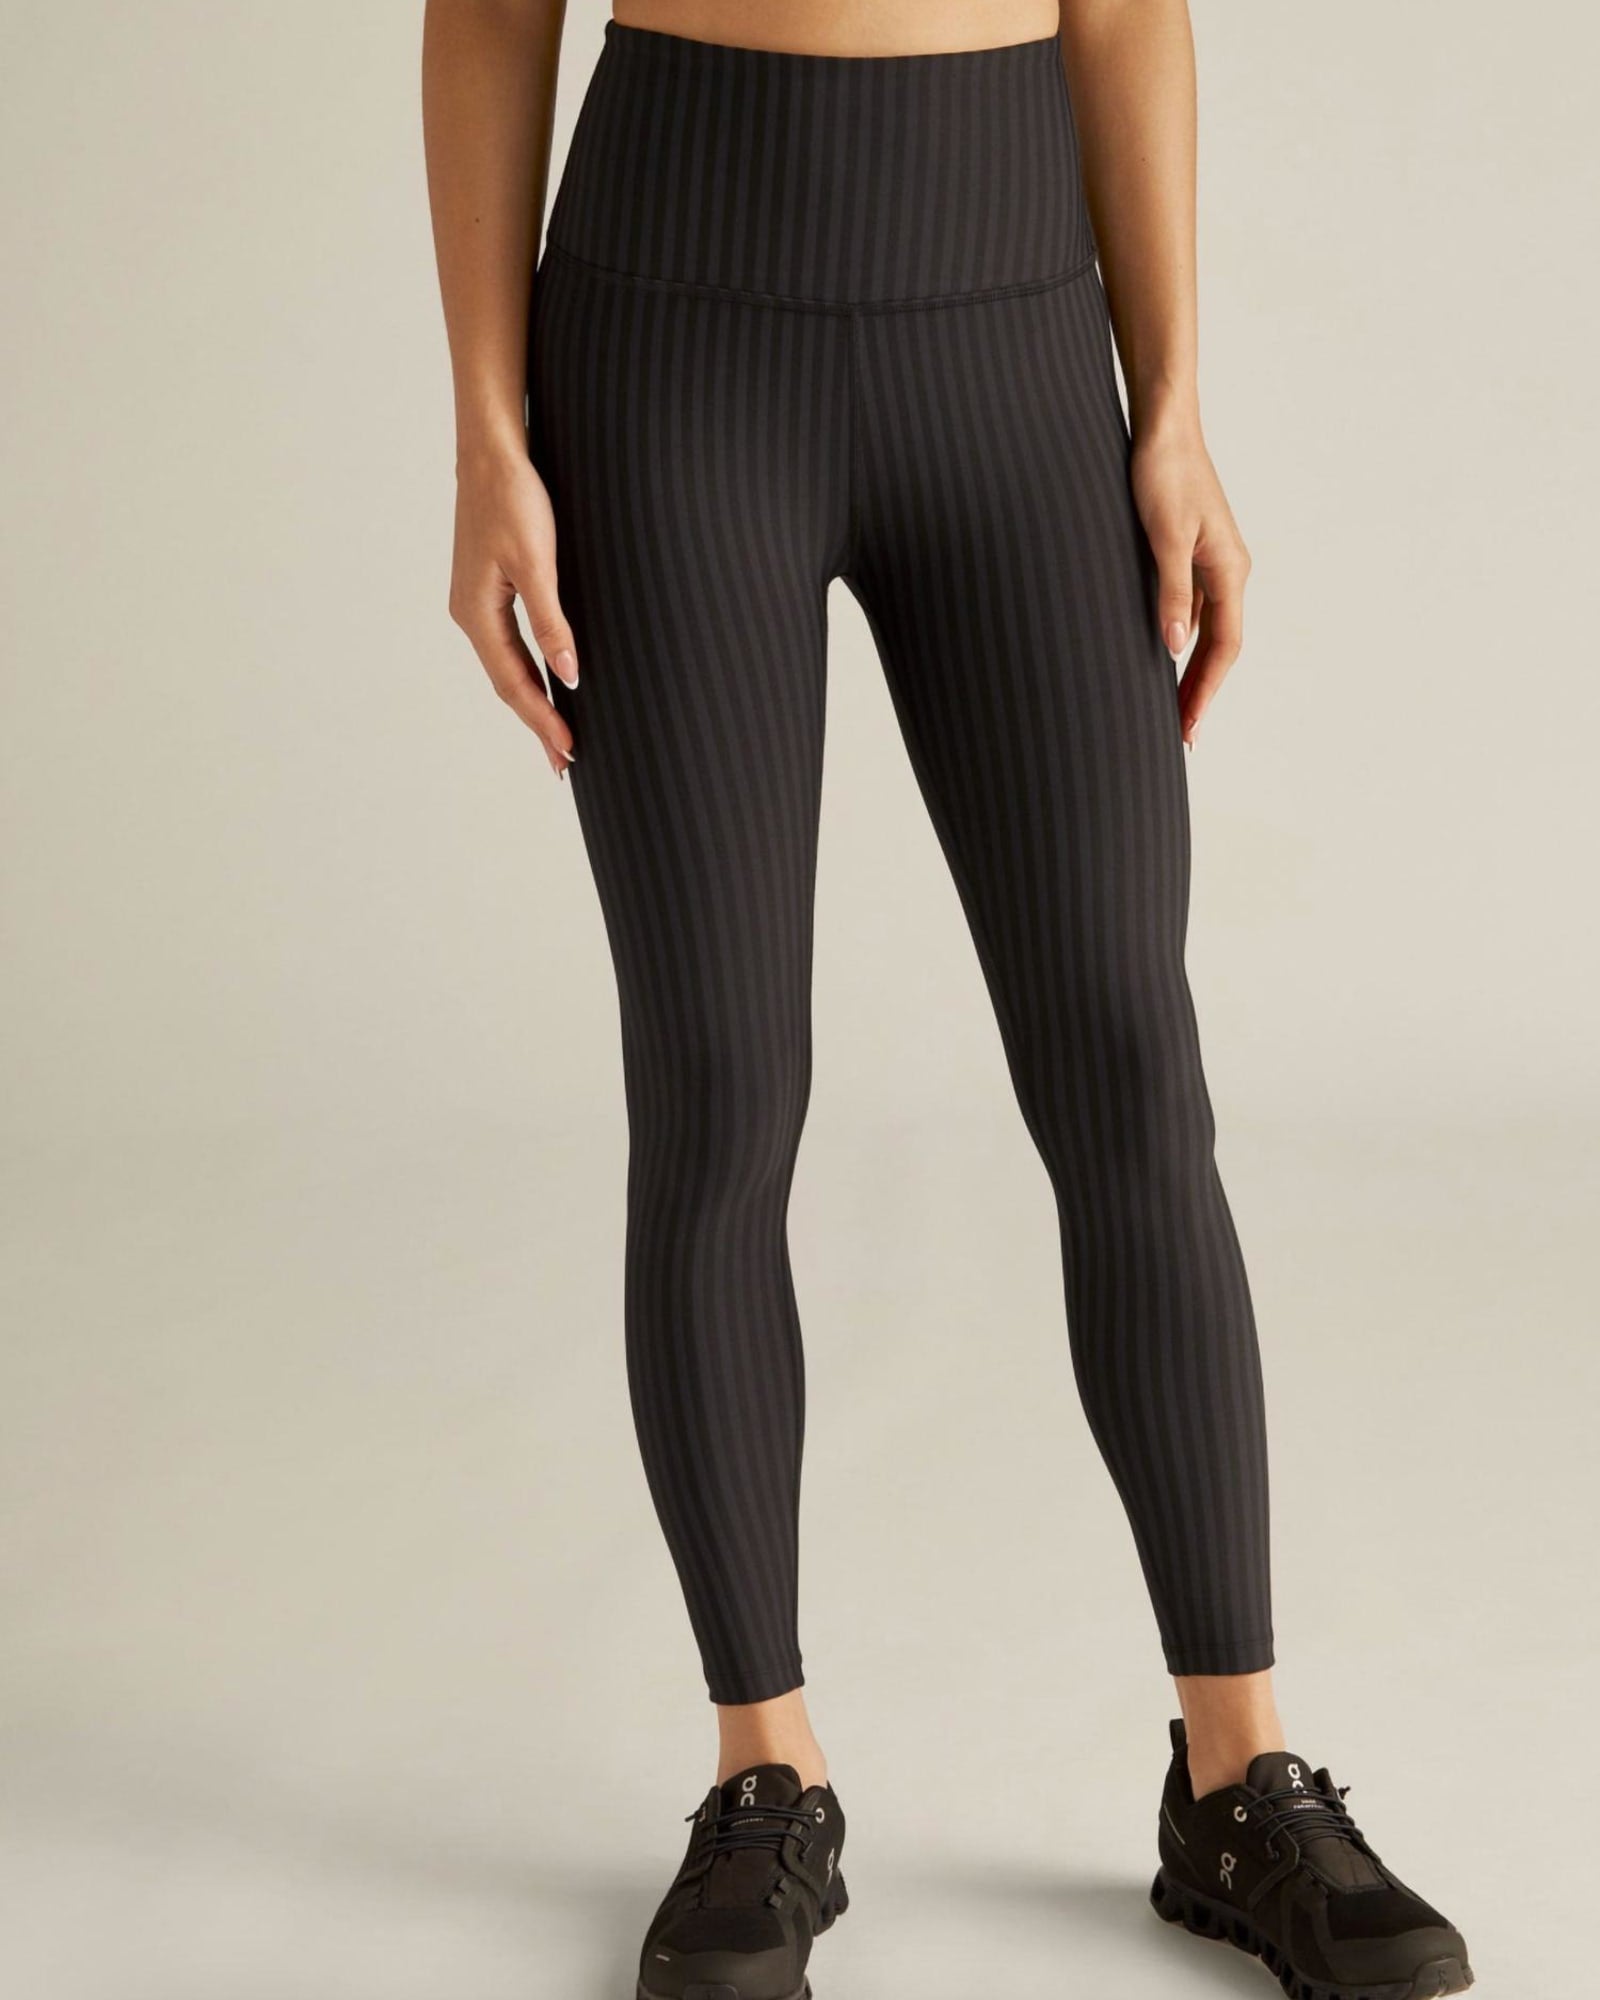 Spacedye High Waist Legging in Black Striped Jacquard | Black Striped Jacquard